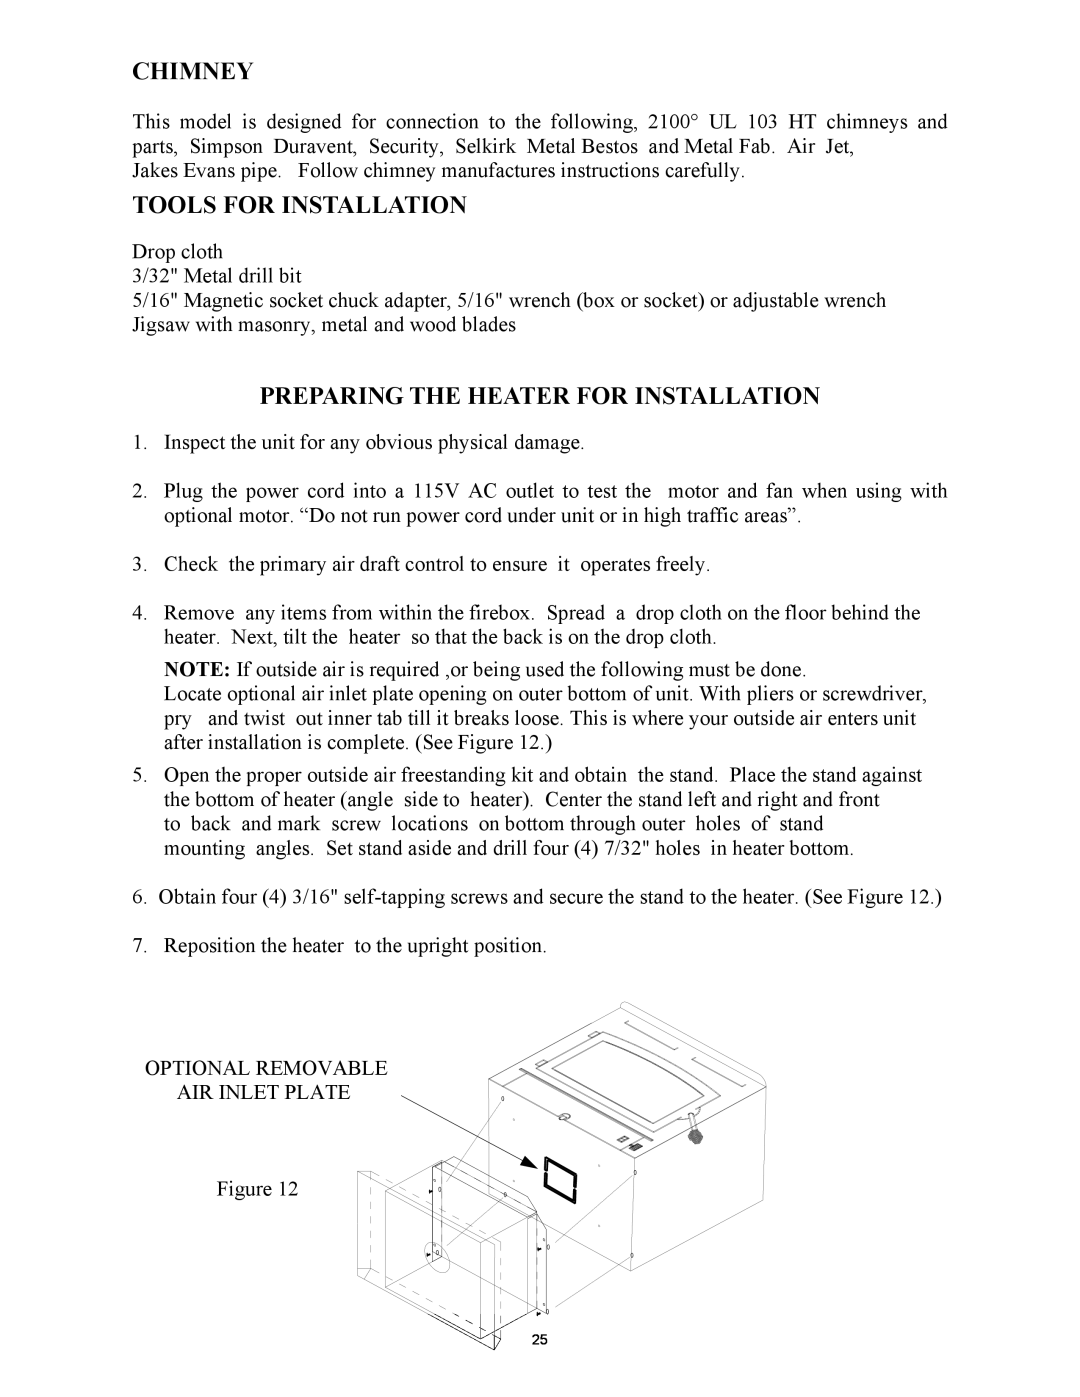 New Buck Corporation 74 installation instructions Chimney, Tools For Installation, Preparing The Heater For Installation 